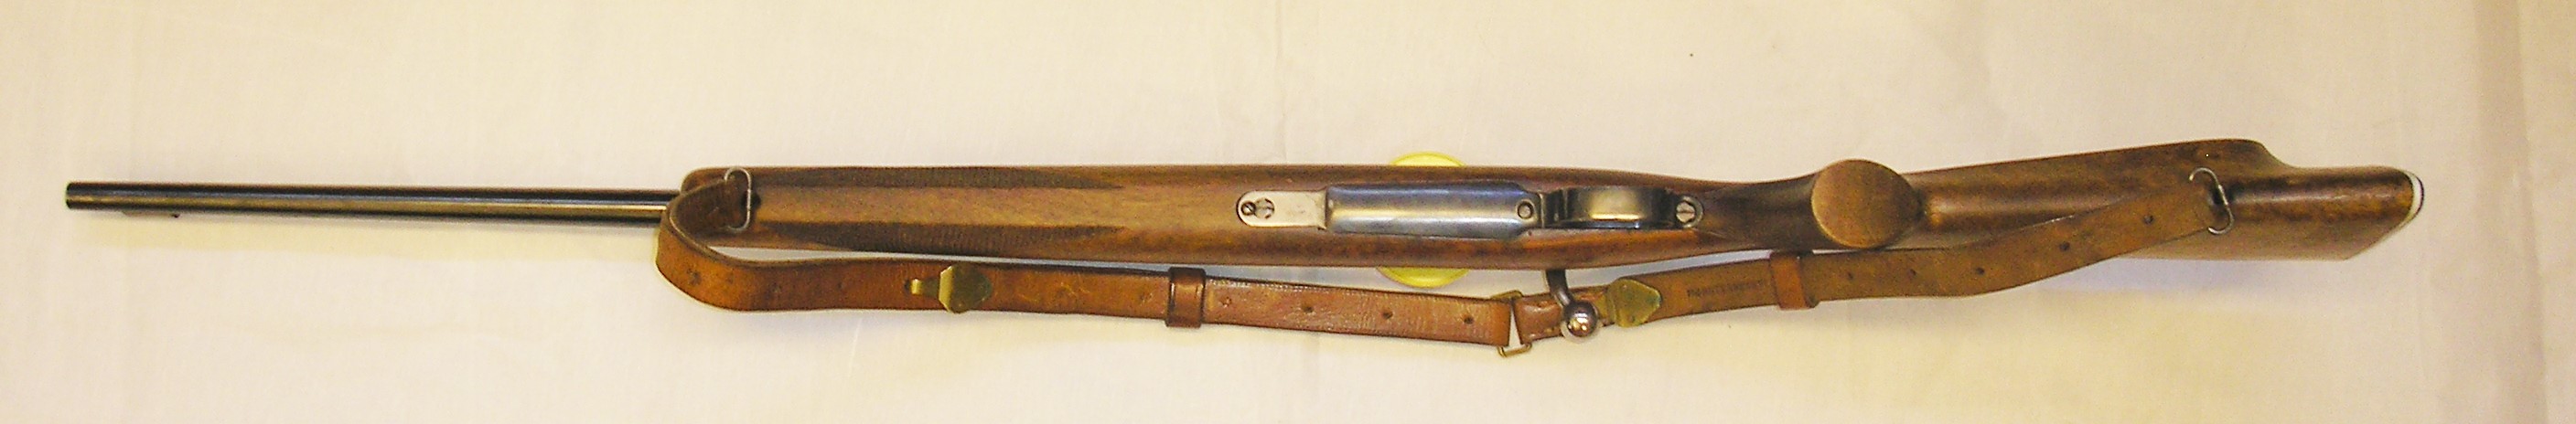 ./guns/rifle/bilder/Rifle-Kongsberg-Mauser-M62-1468-4.JPG